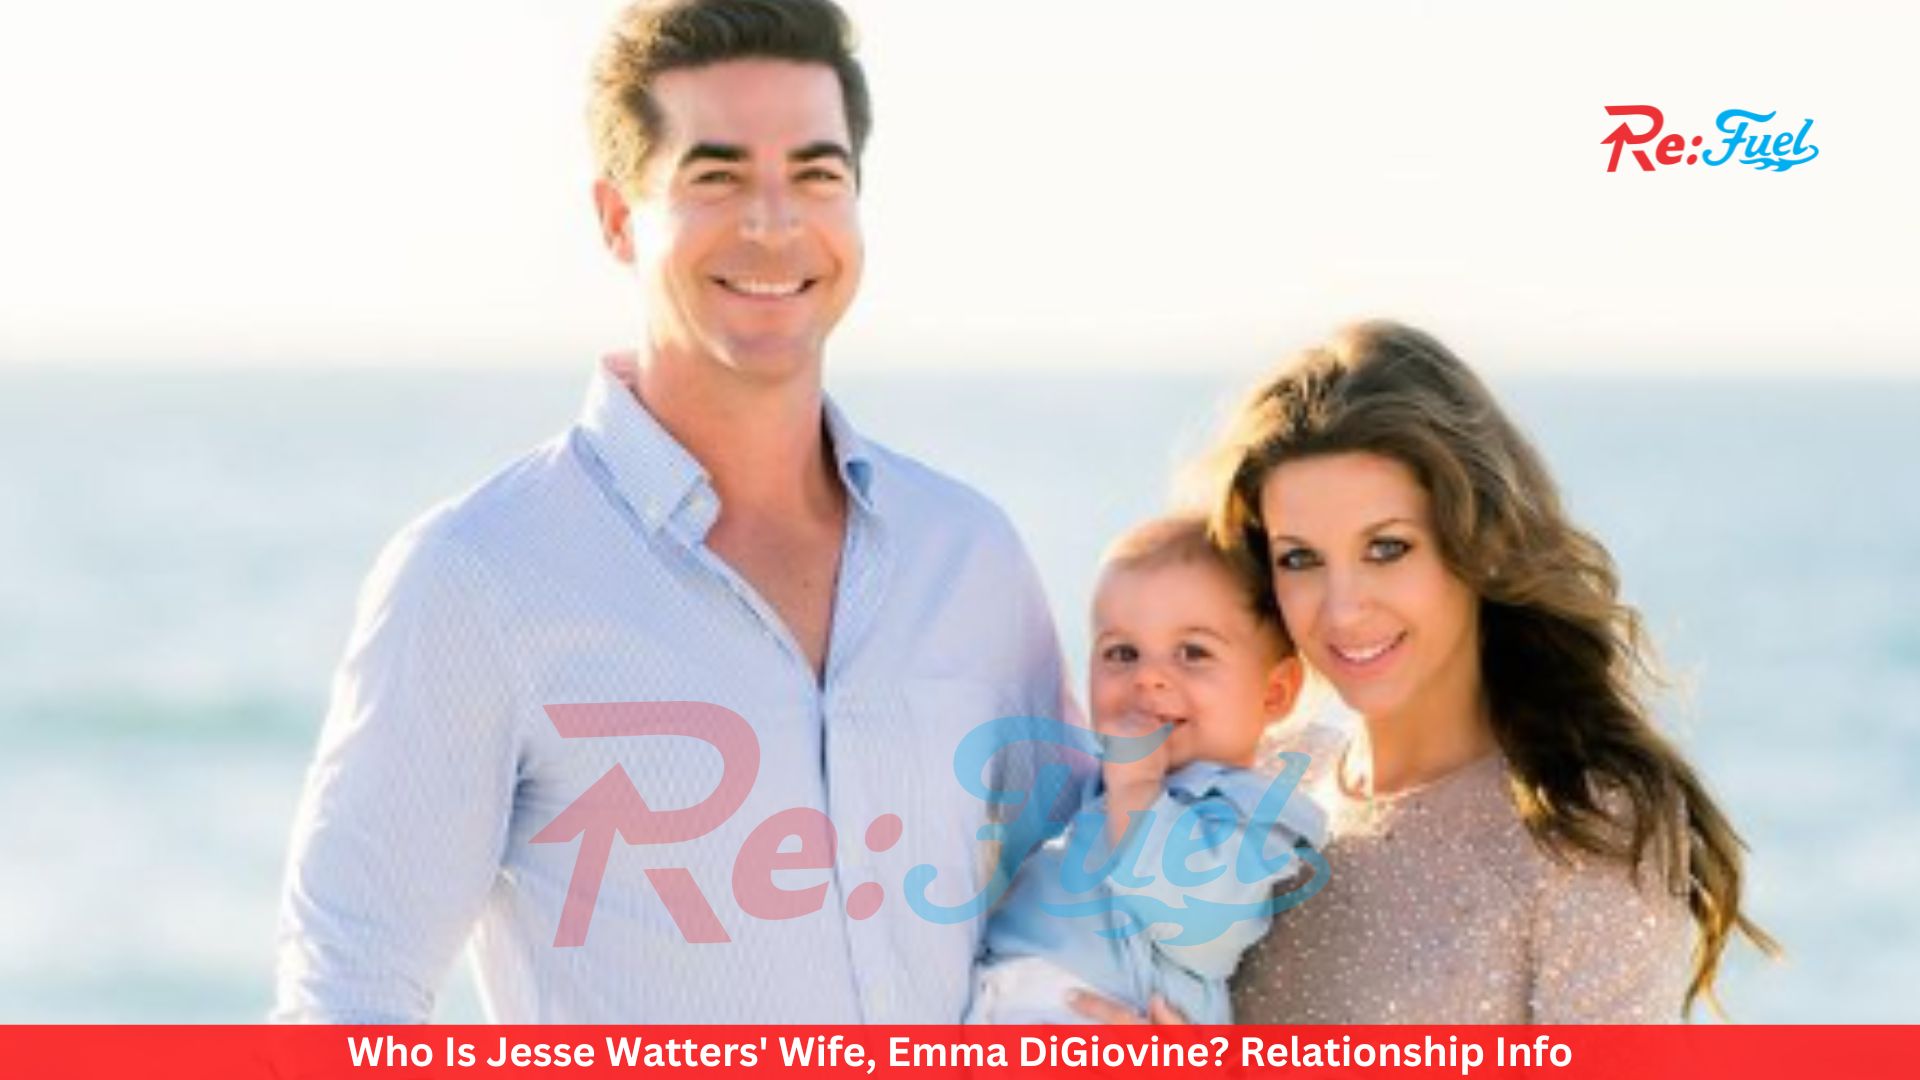 Who Is Jesse Watters' Wife, Emma DiGiovine? Relationship Info